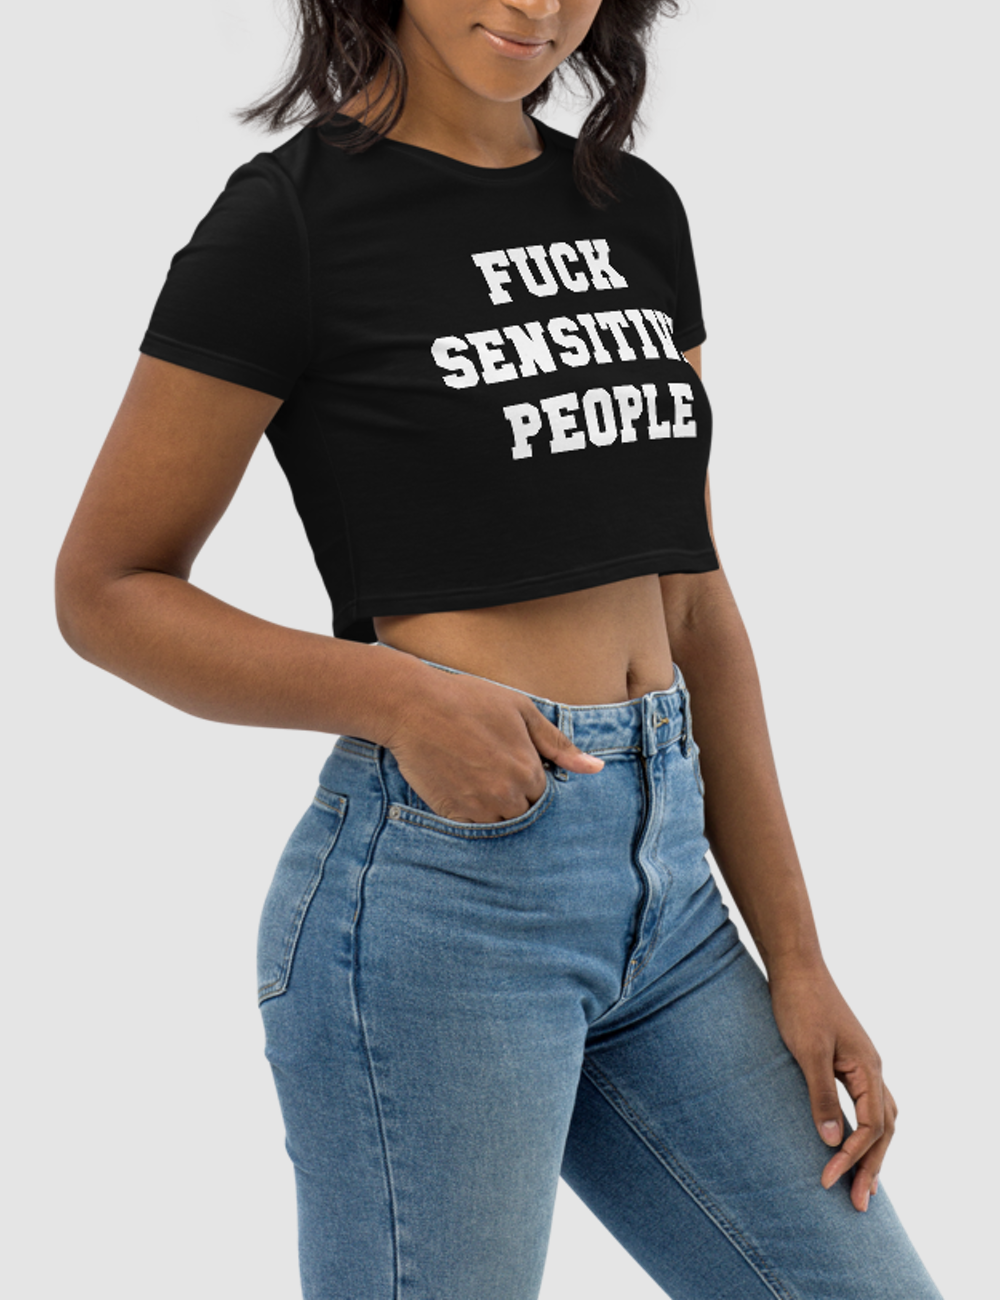 Fuck Sensitive People | Women's Crop Top T-Shirt OniTakai